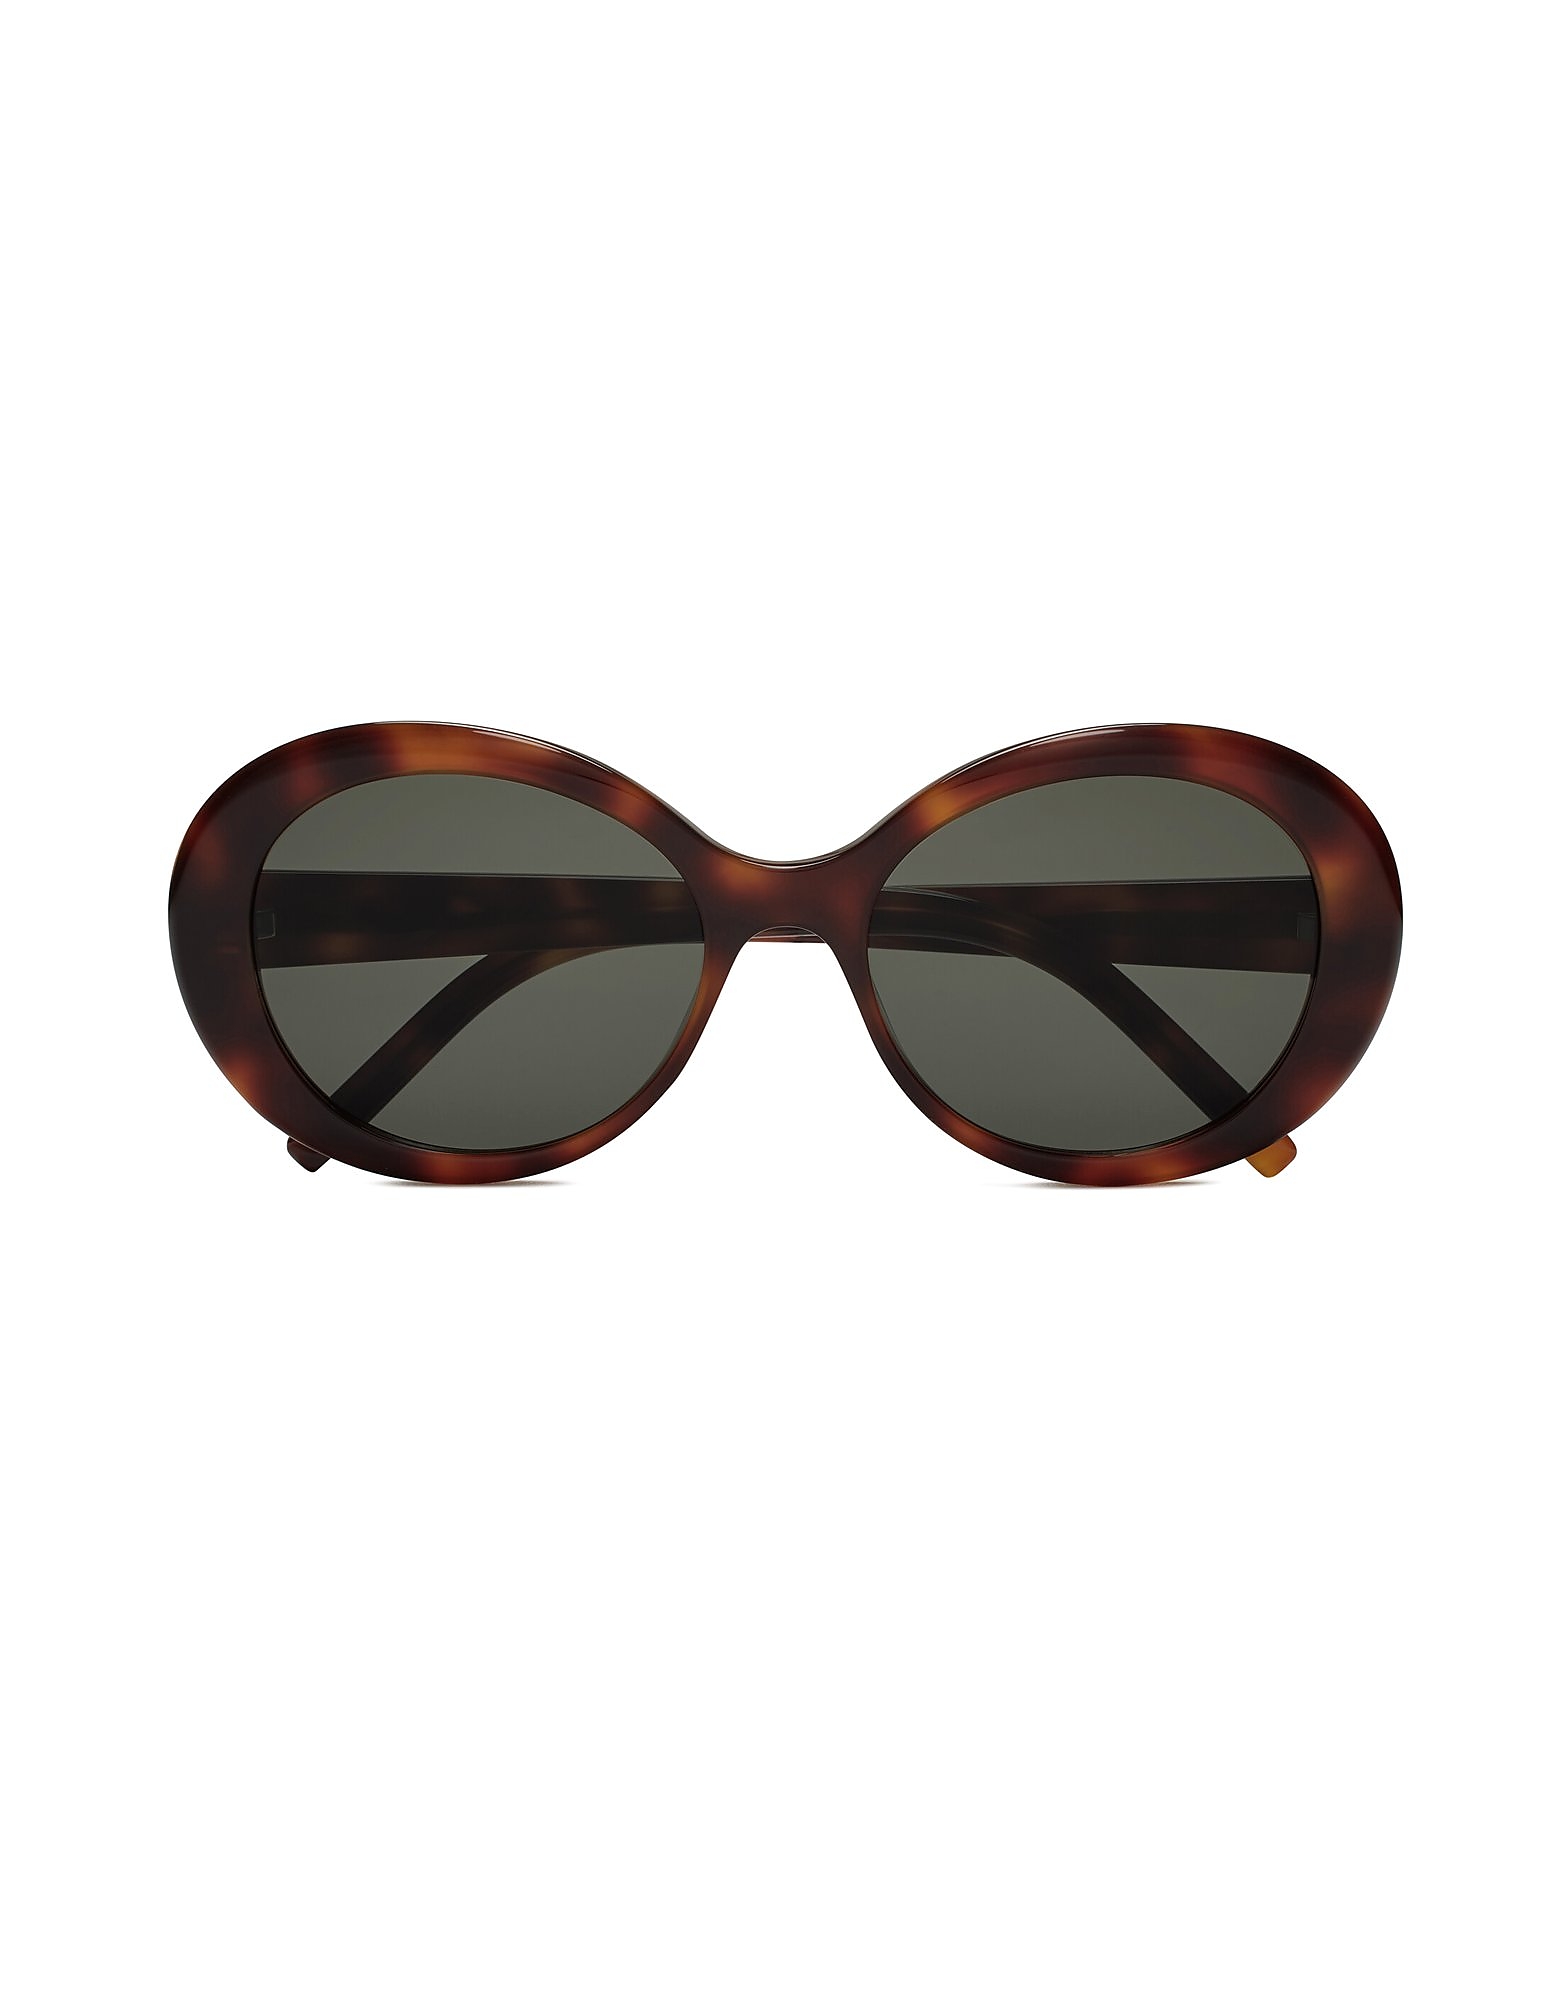 Saint Laurent Sunglasses Round Butterfly Acetate Women's Sunglasses